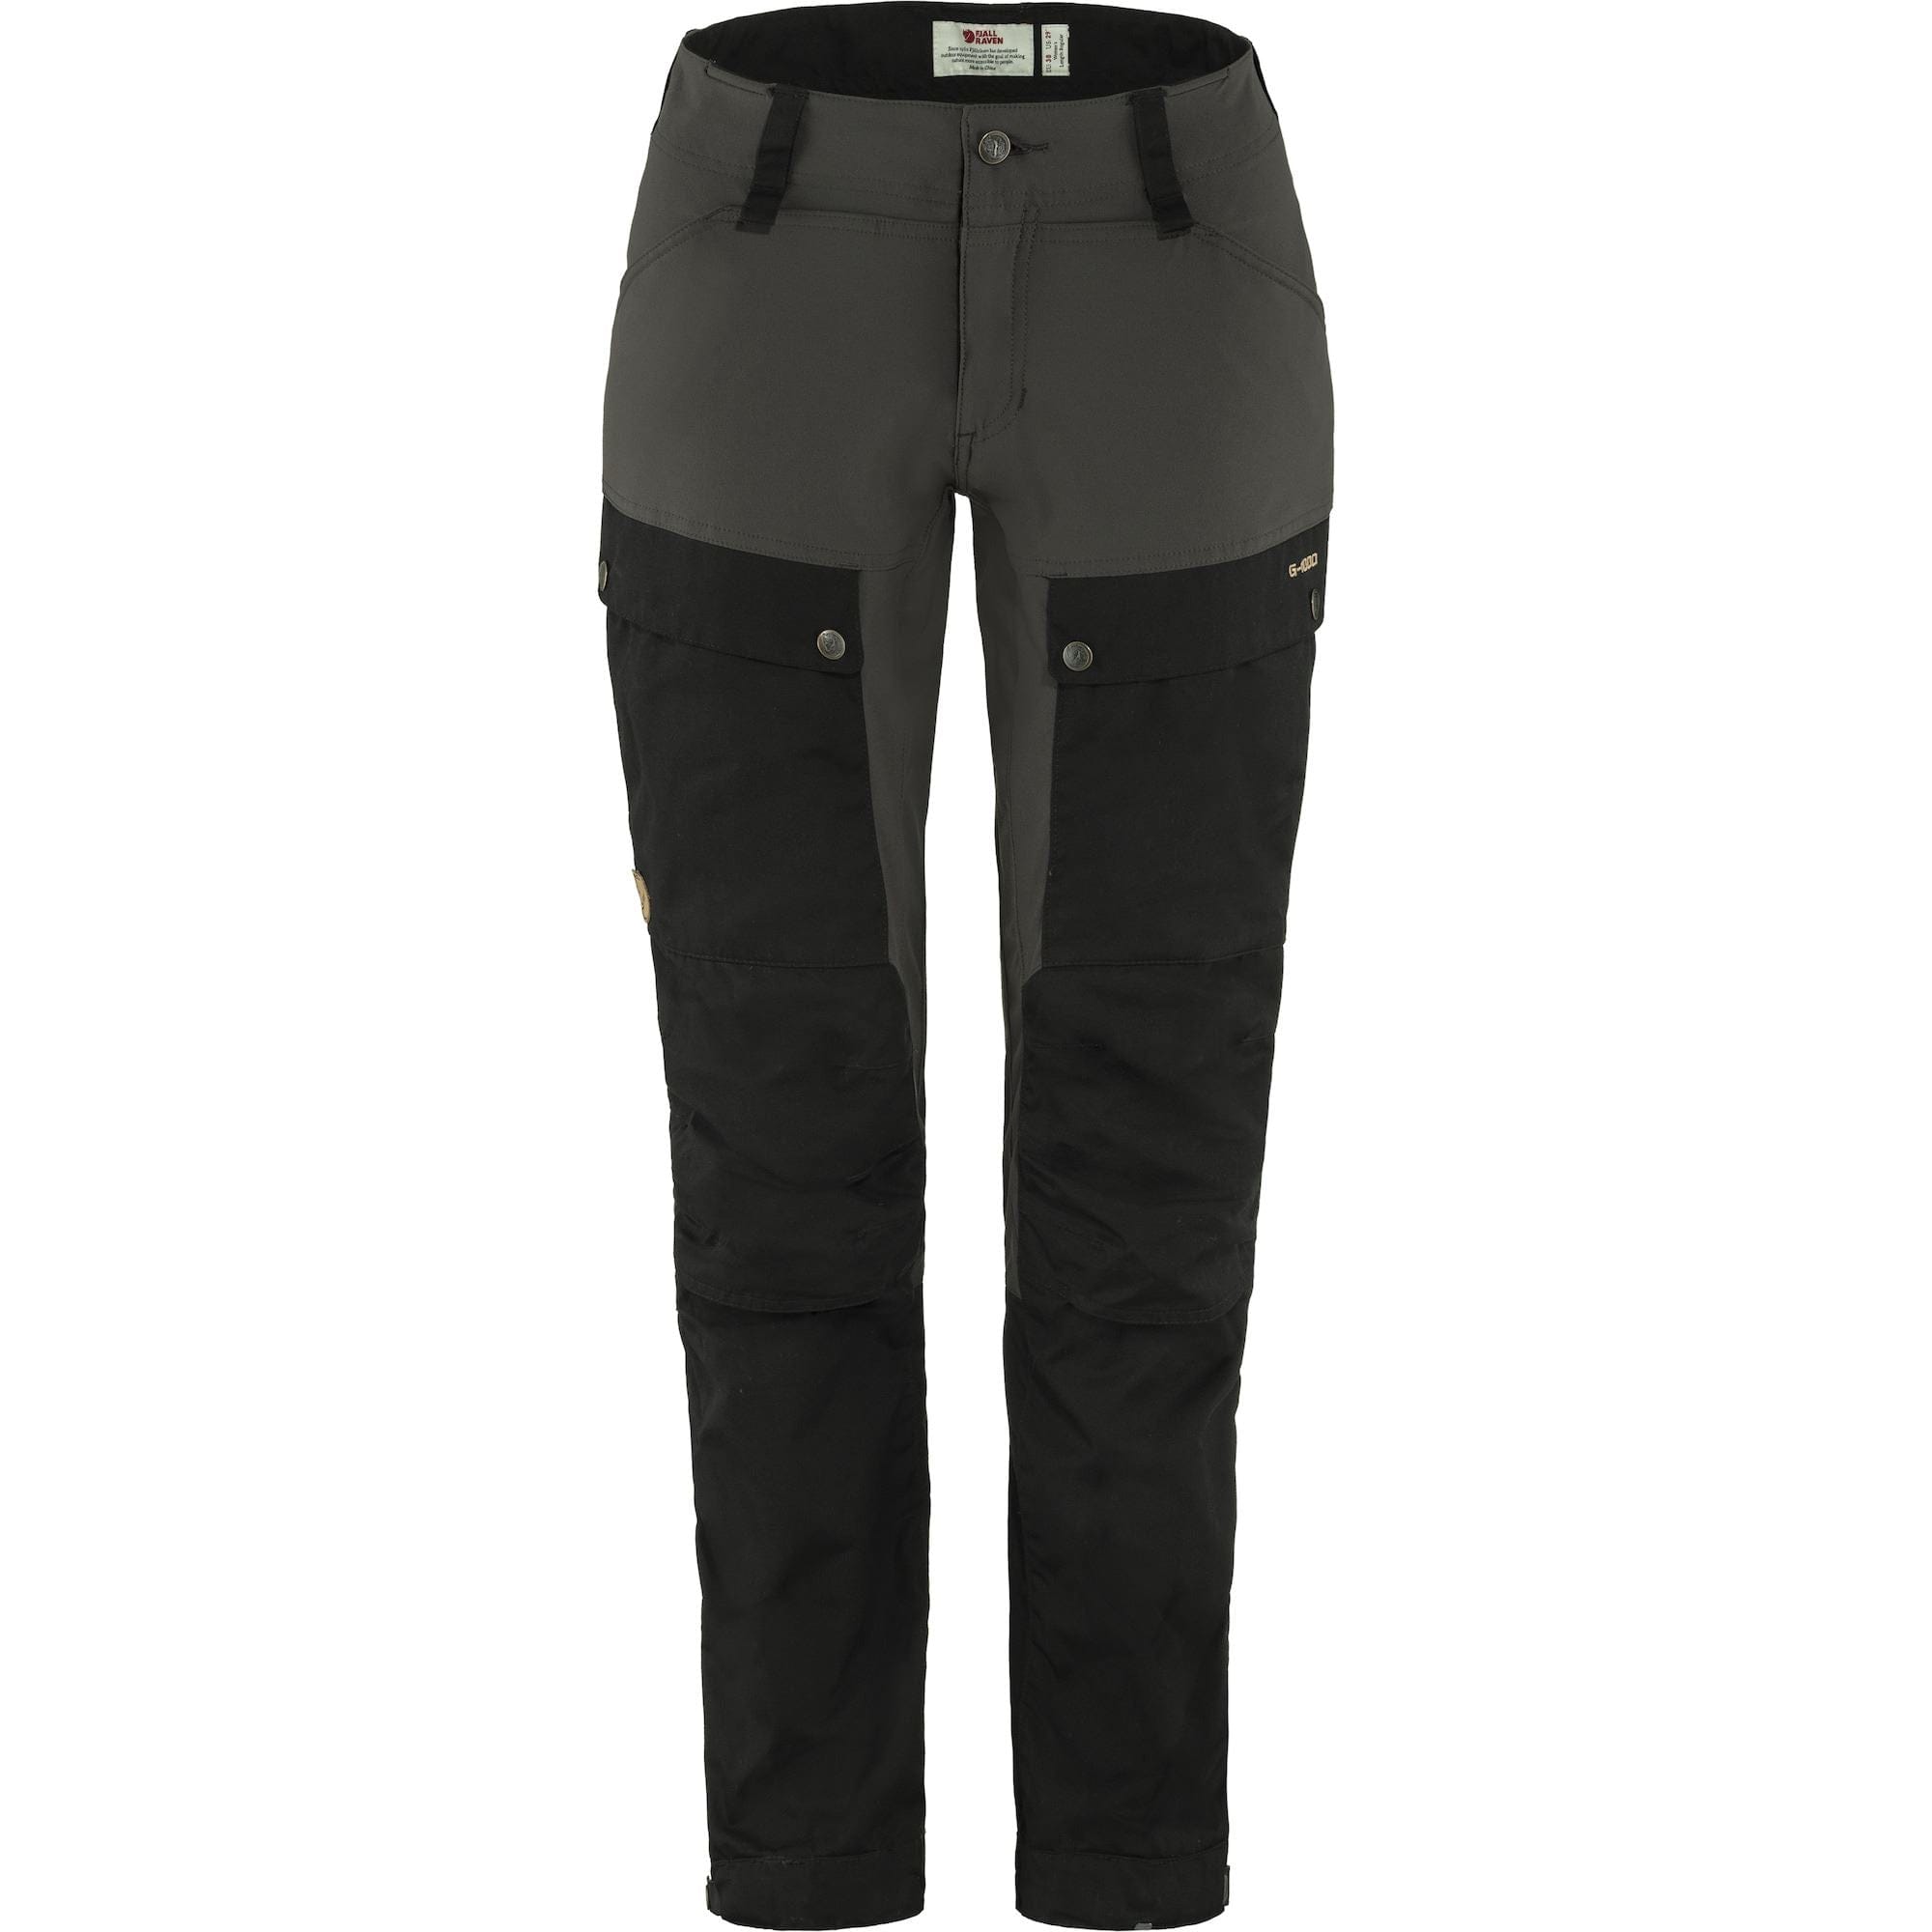 Fjällräven Trousers 36 EU / Black-Stone Grey - Short Fjällräven Keb Curved Trousers Short W's